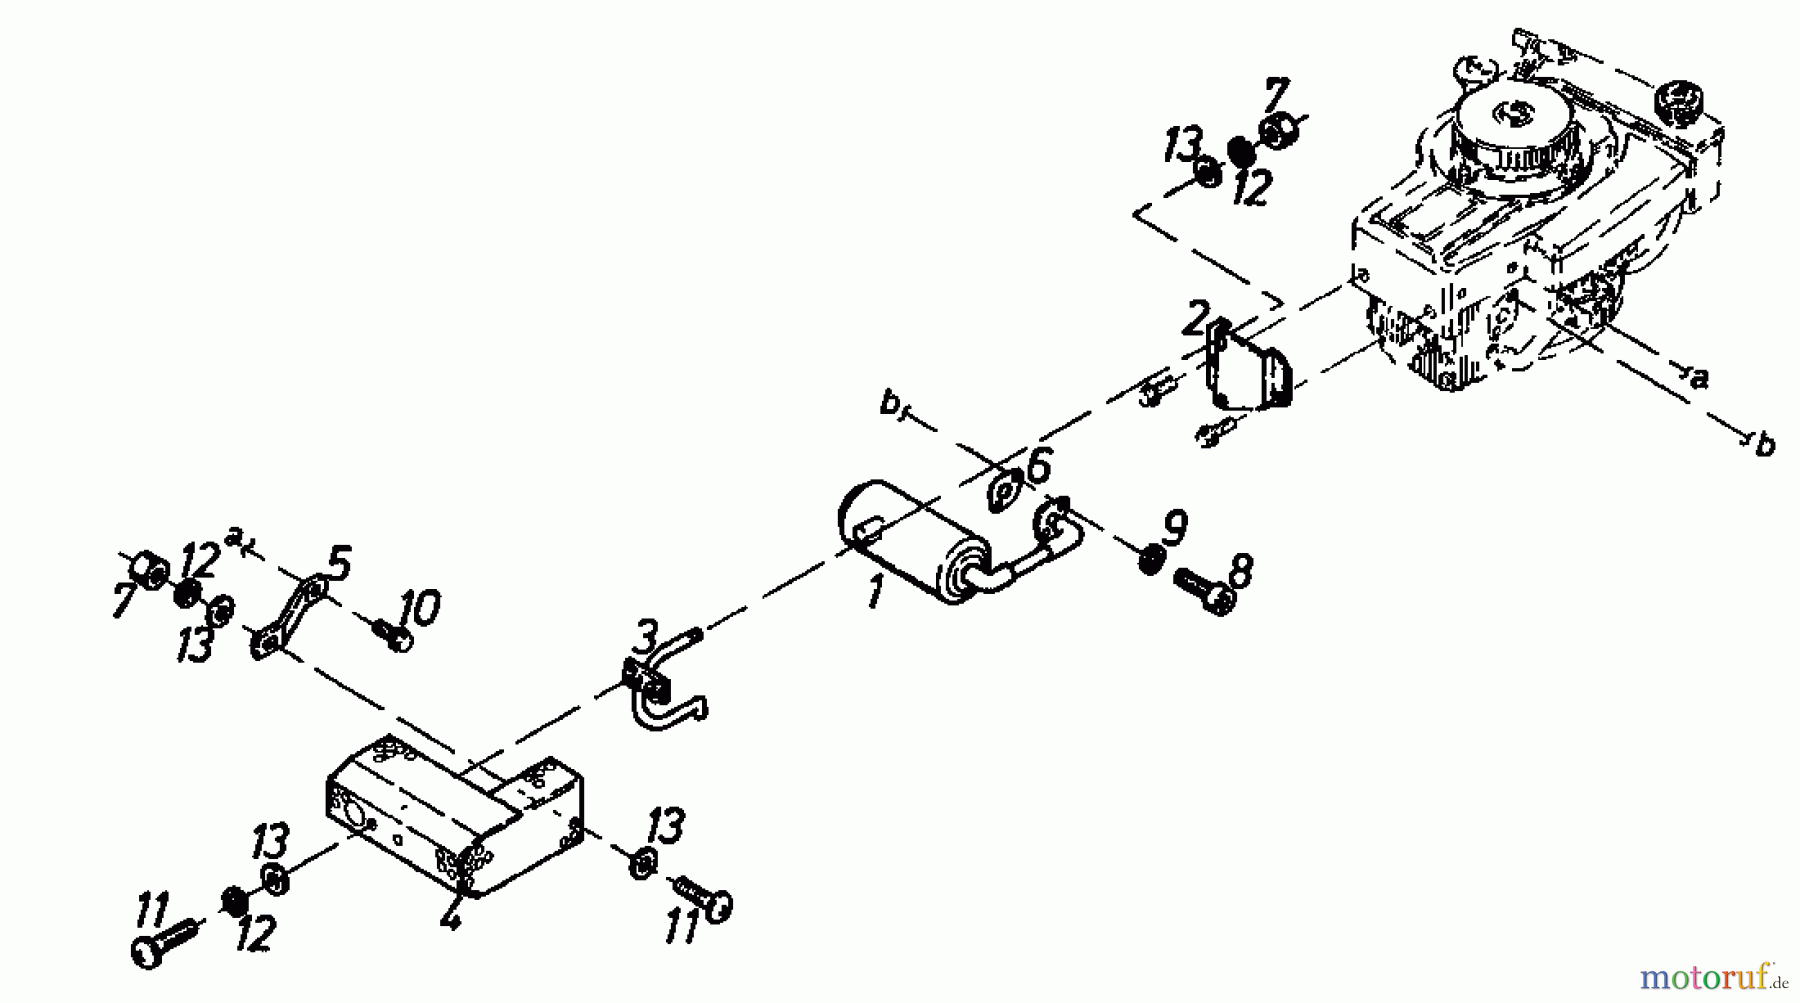  MTD Accessories Accessories lawn mowers Katalysator KAT - Tecna 02843.01  (1987) Muffler